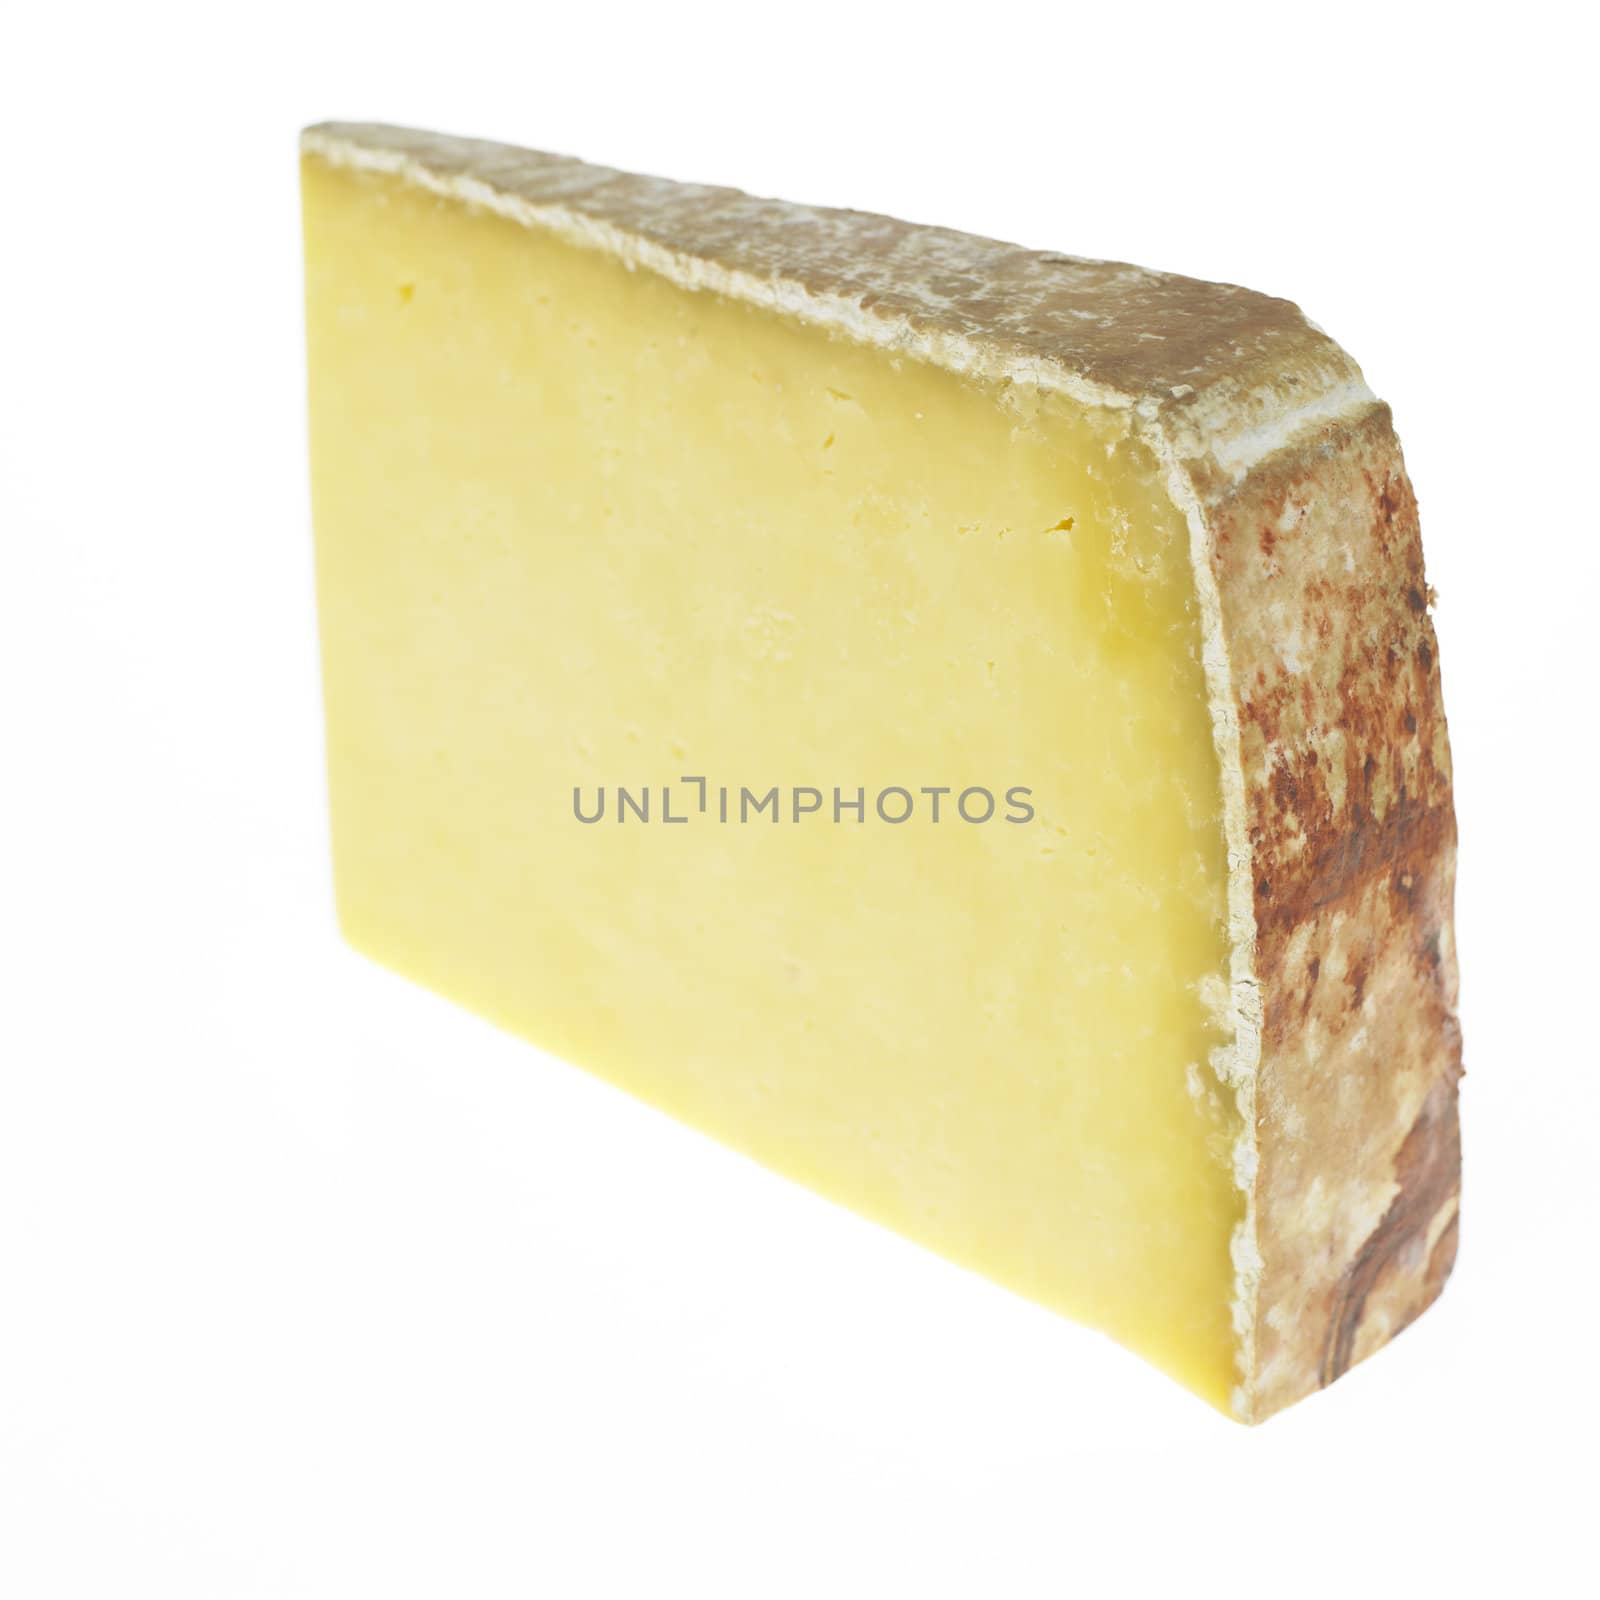 cantal cheese